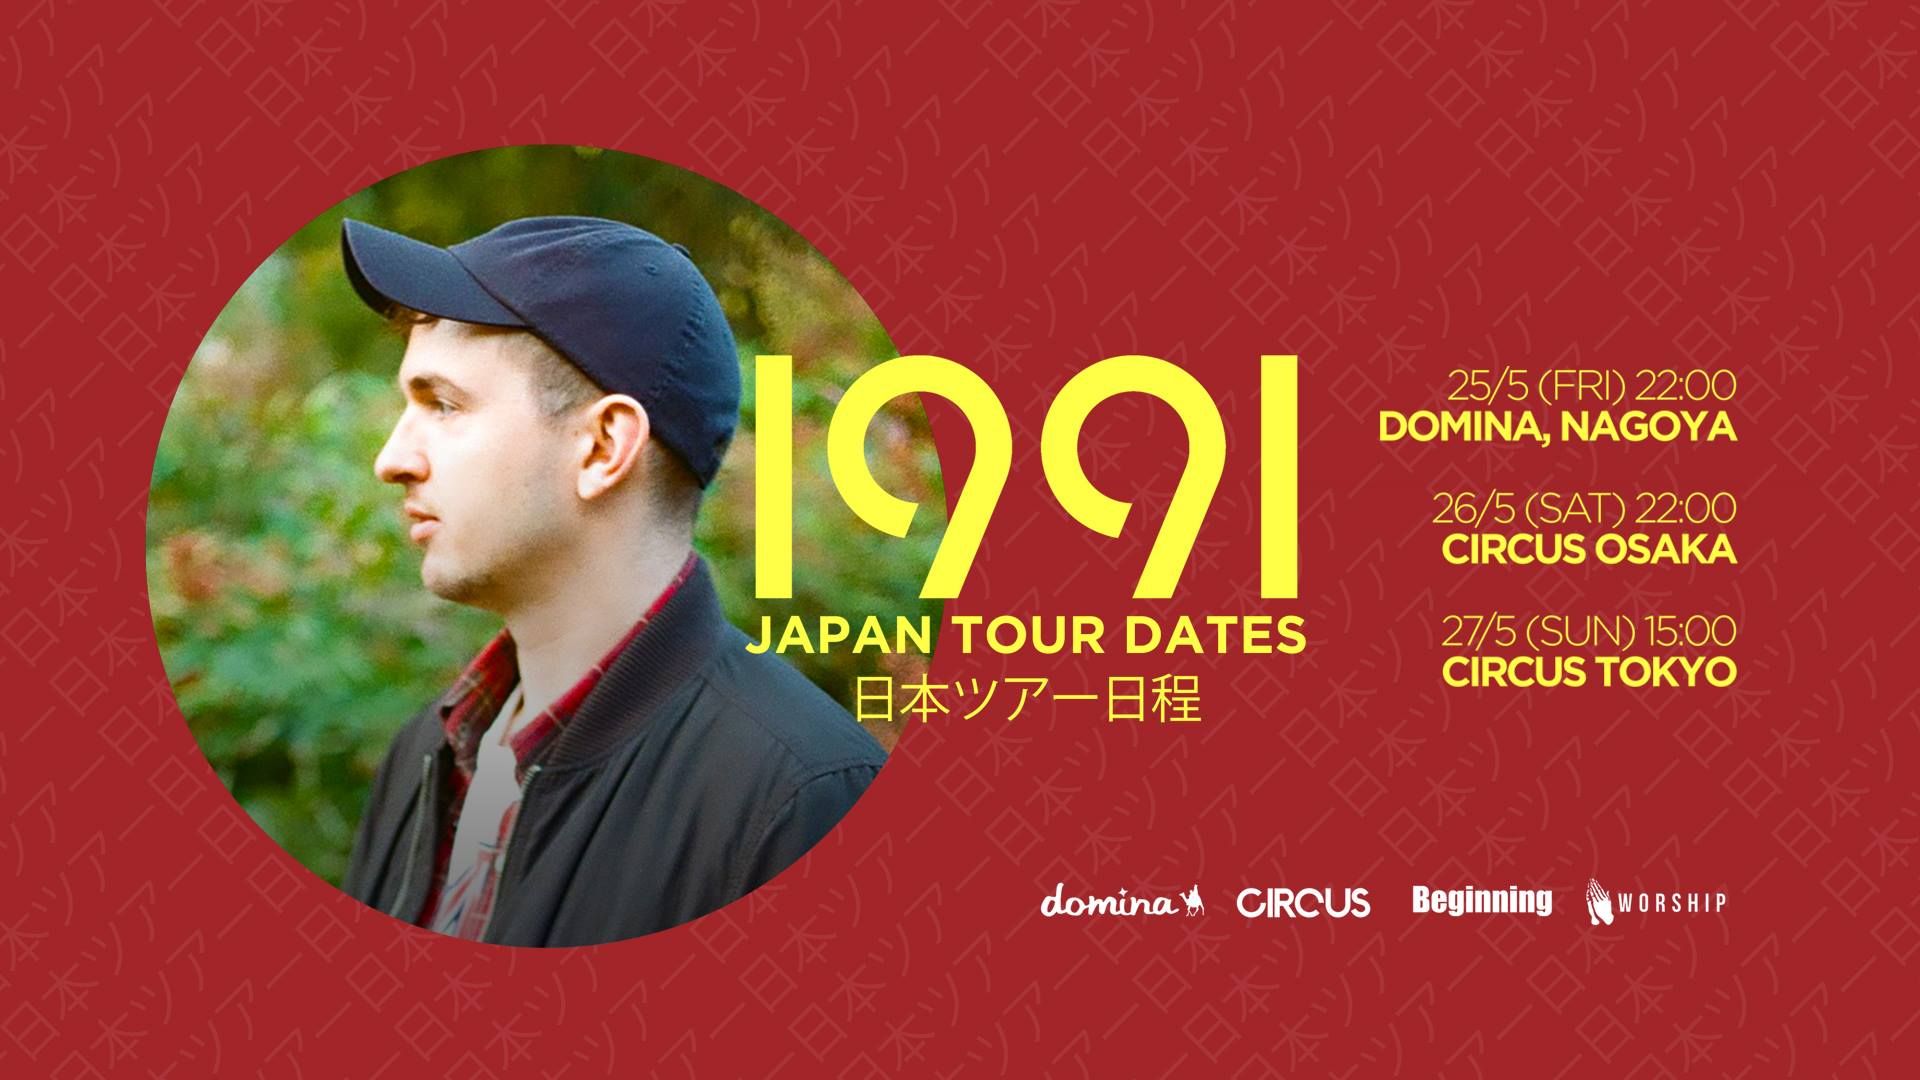 Beginning presents 1991 JAPAN TOUR OSAKA